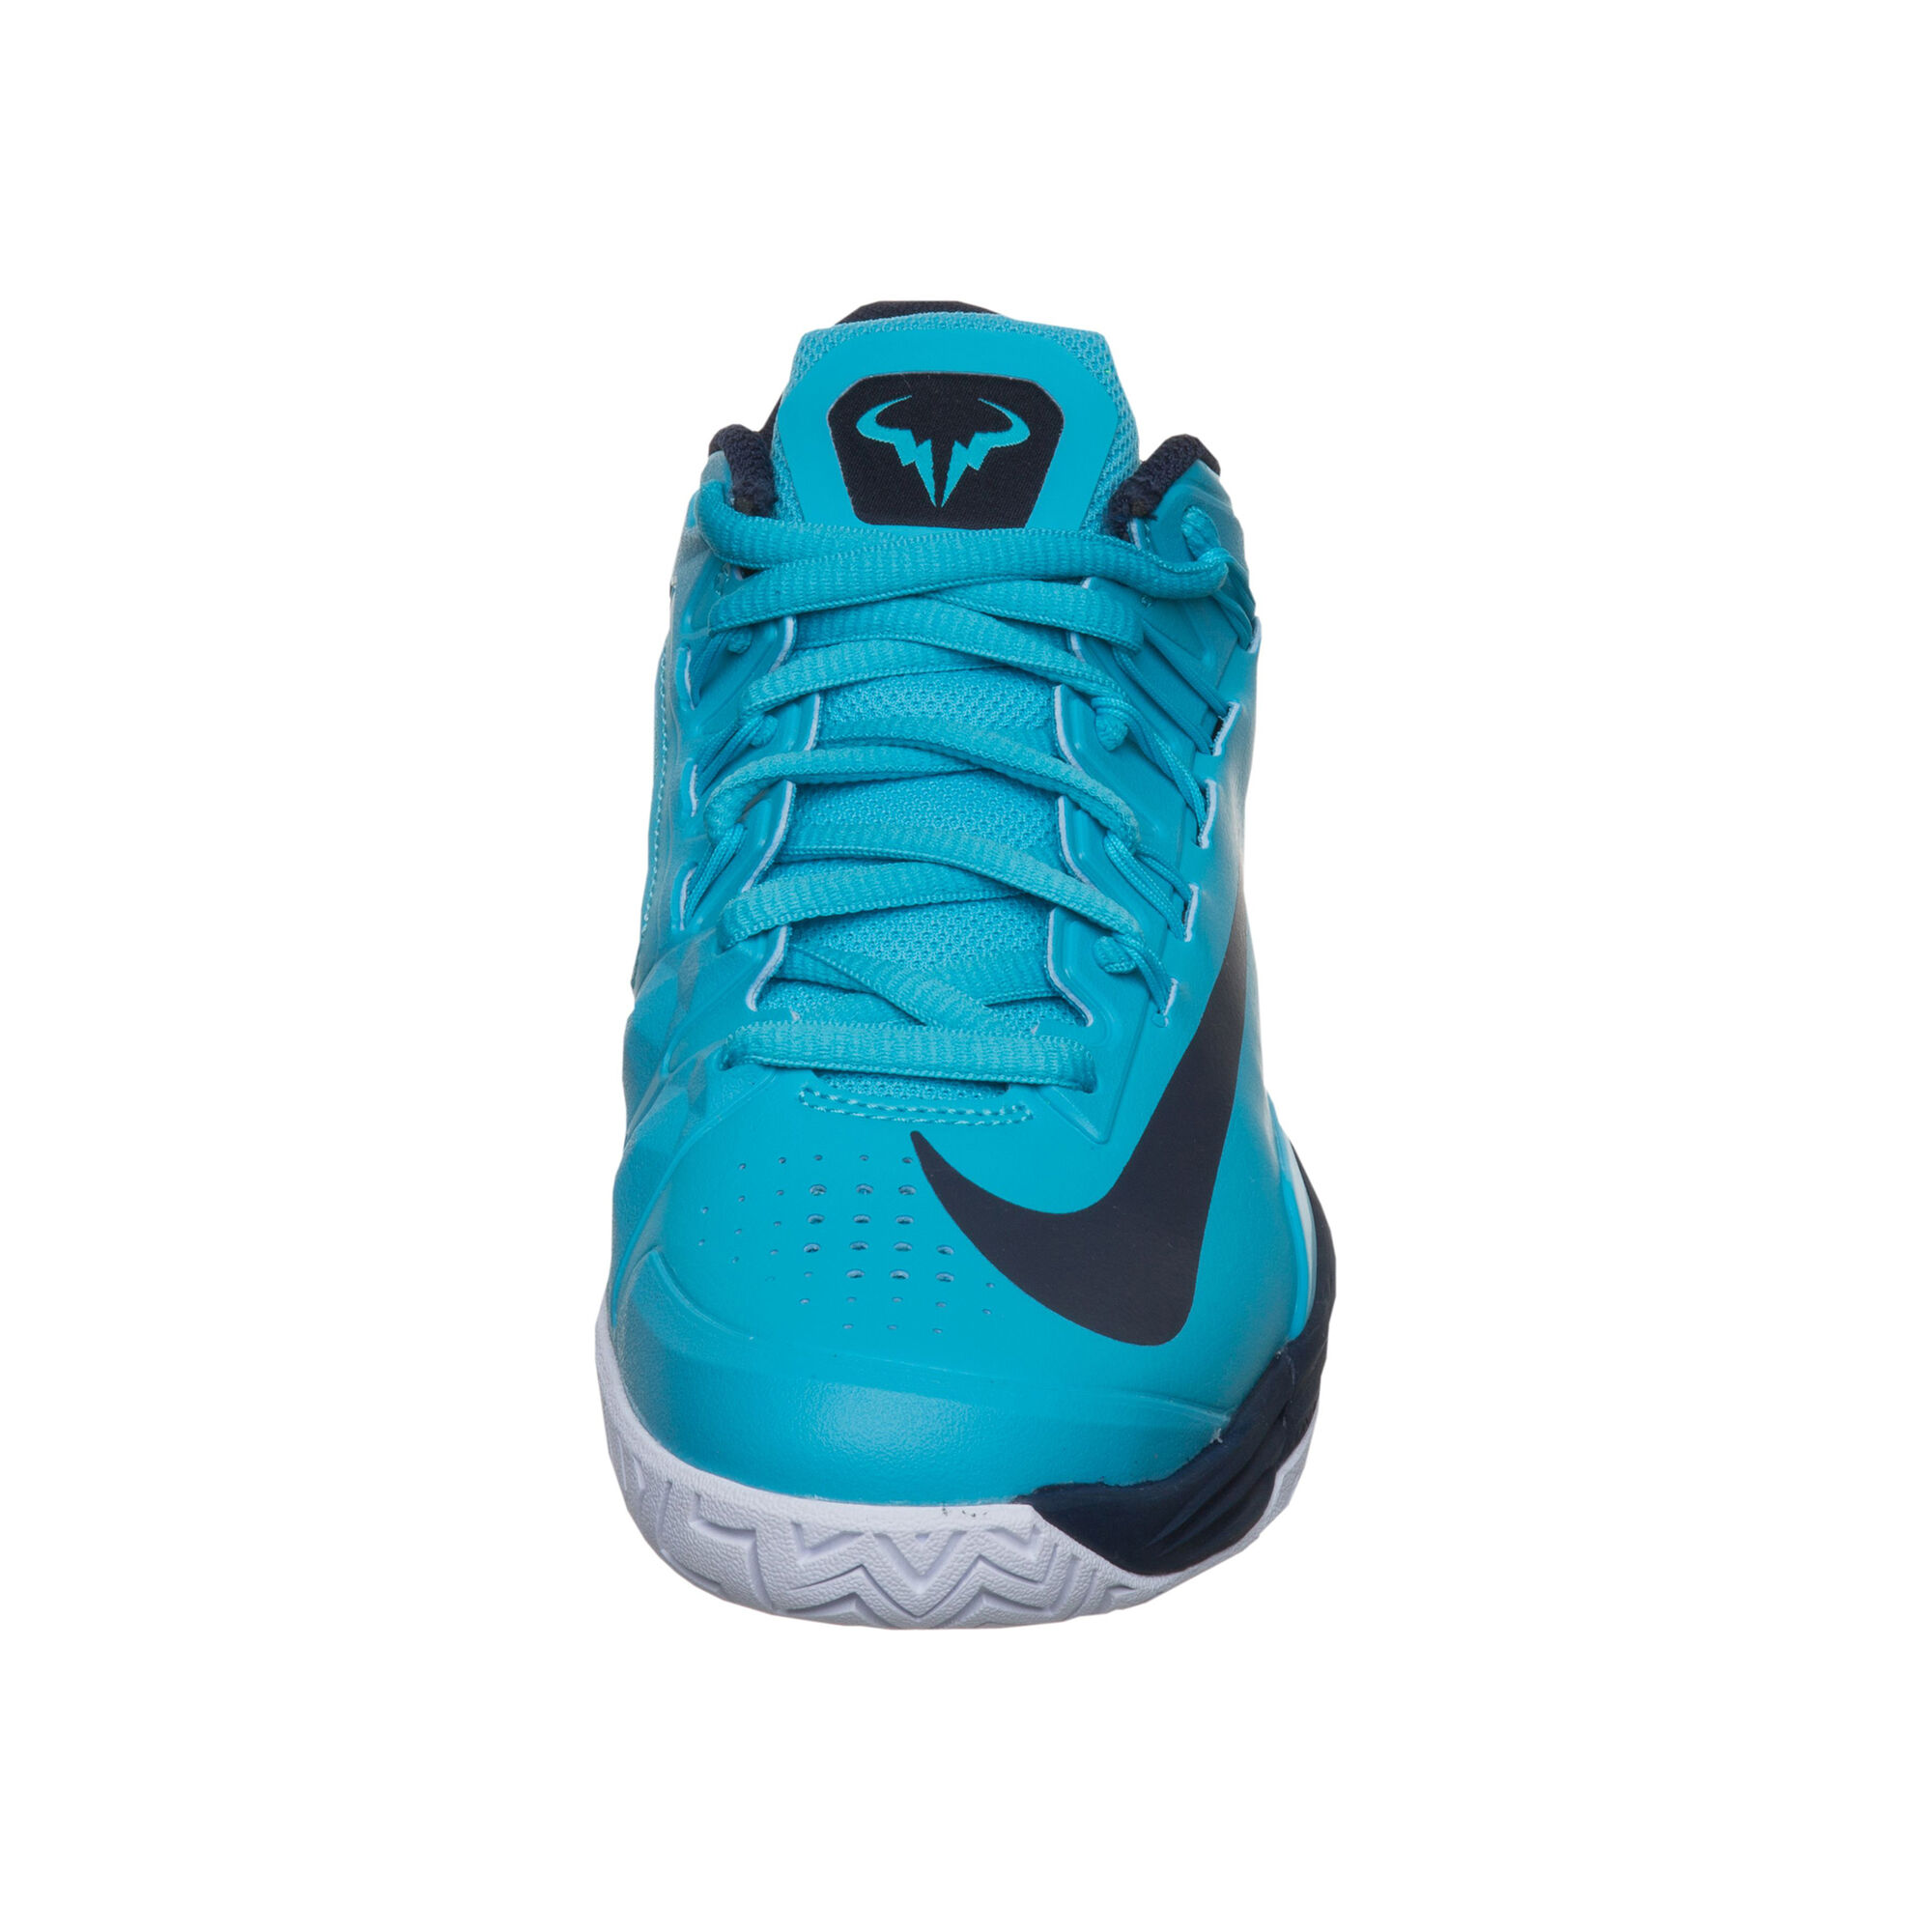 Nike Rafael Nadal Lunar Ballistec 1.5 LG Limited Todas Superficies Niños - Turquesa, Azul Oscuro compra online | Tennis-Point